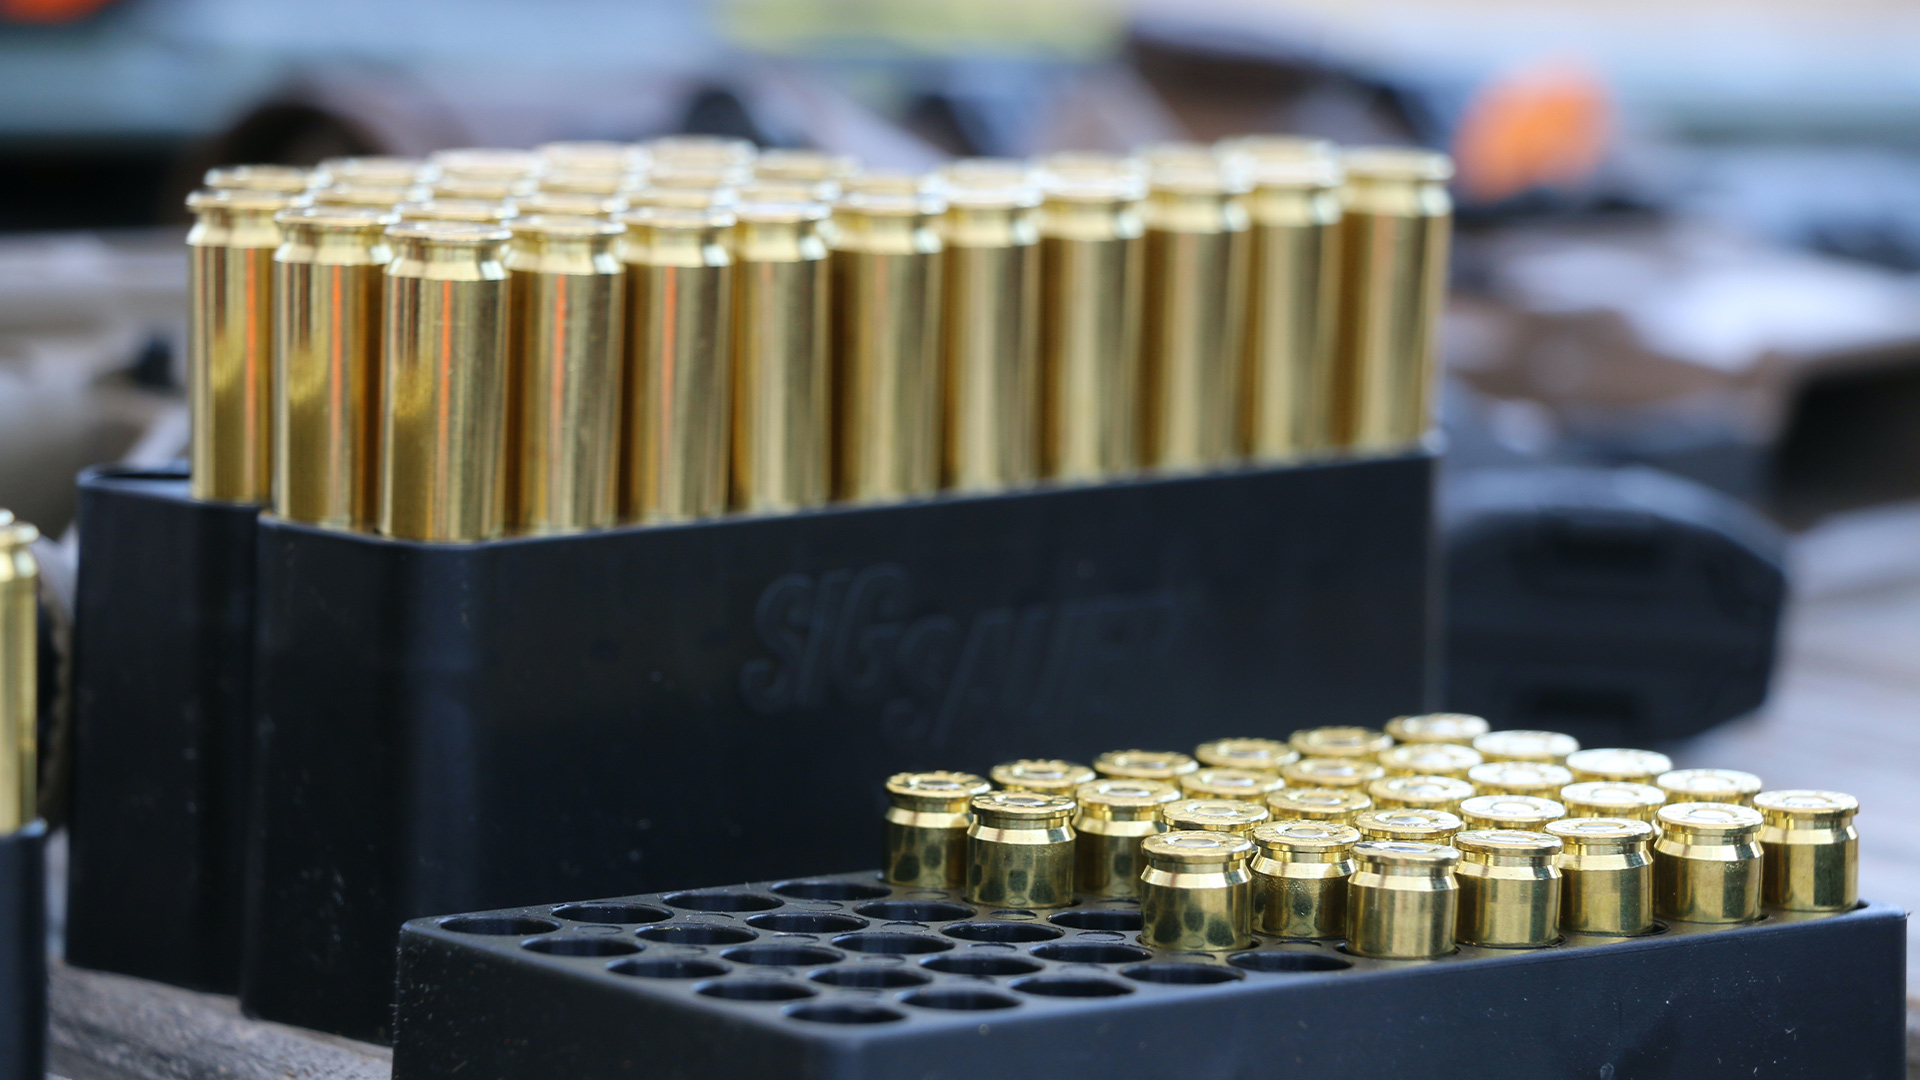 Rifle cartridges